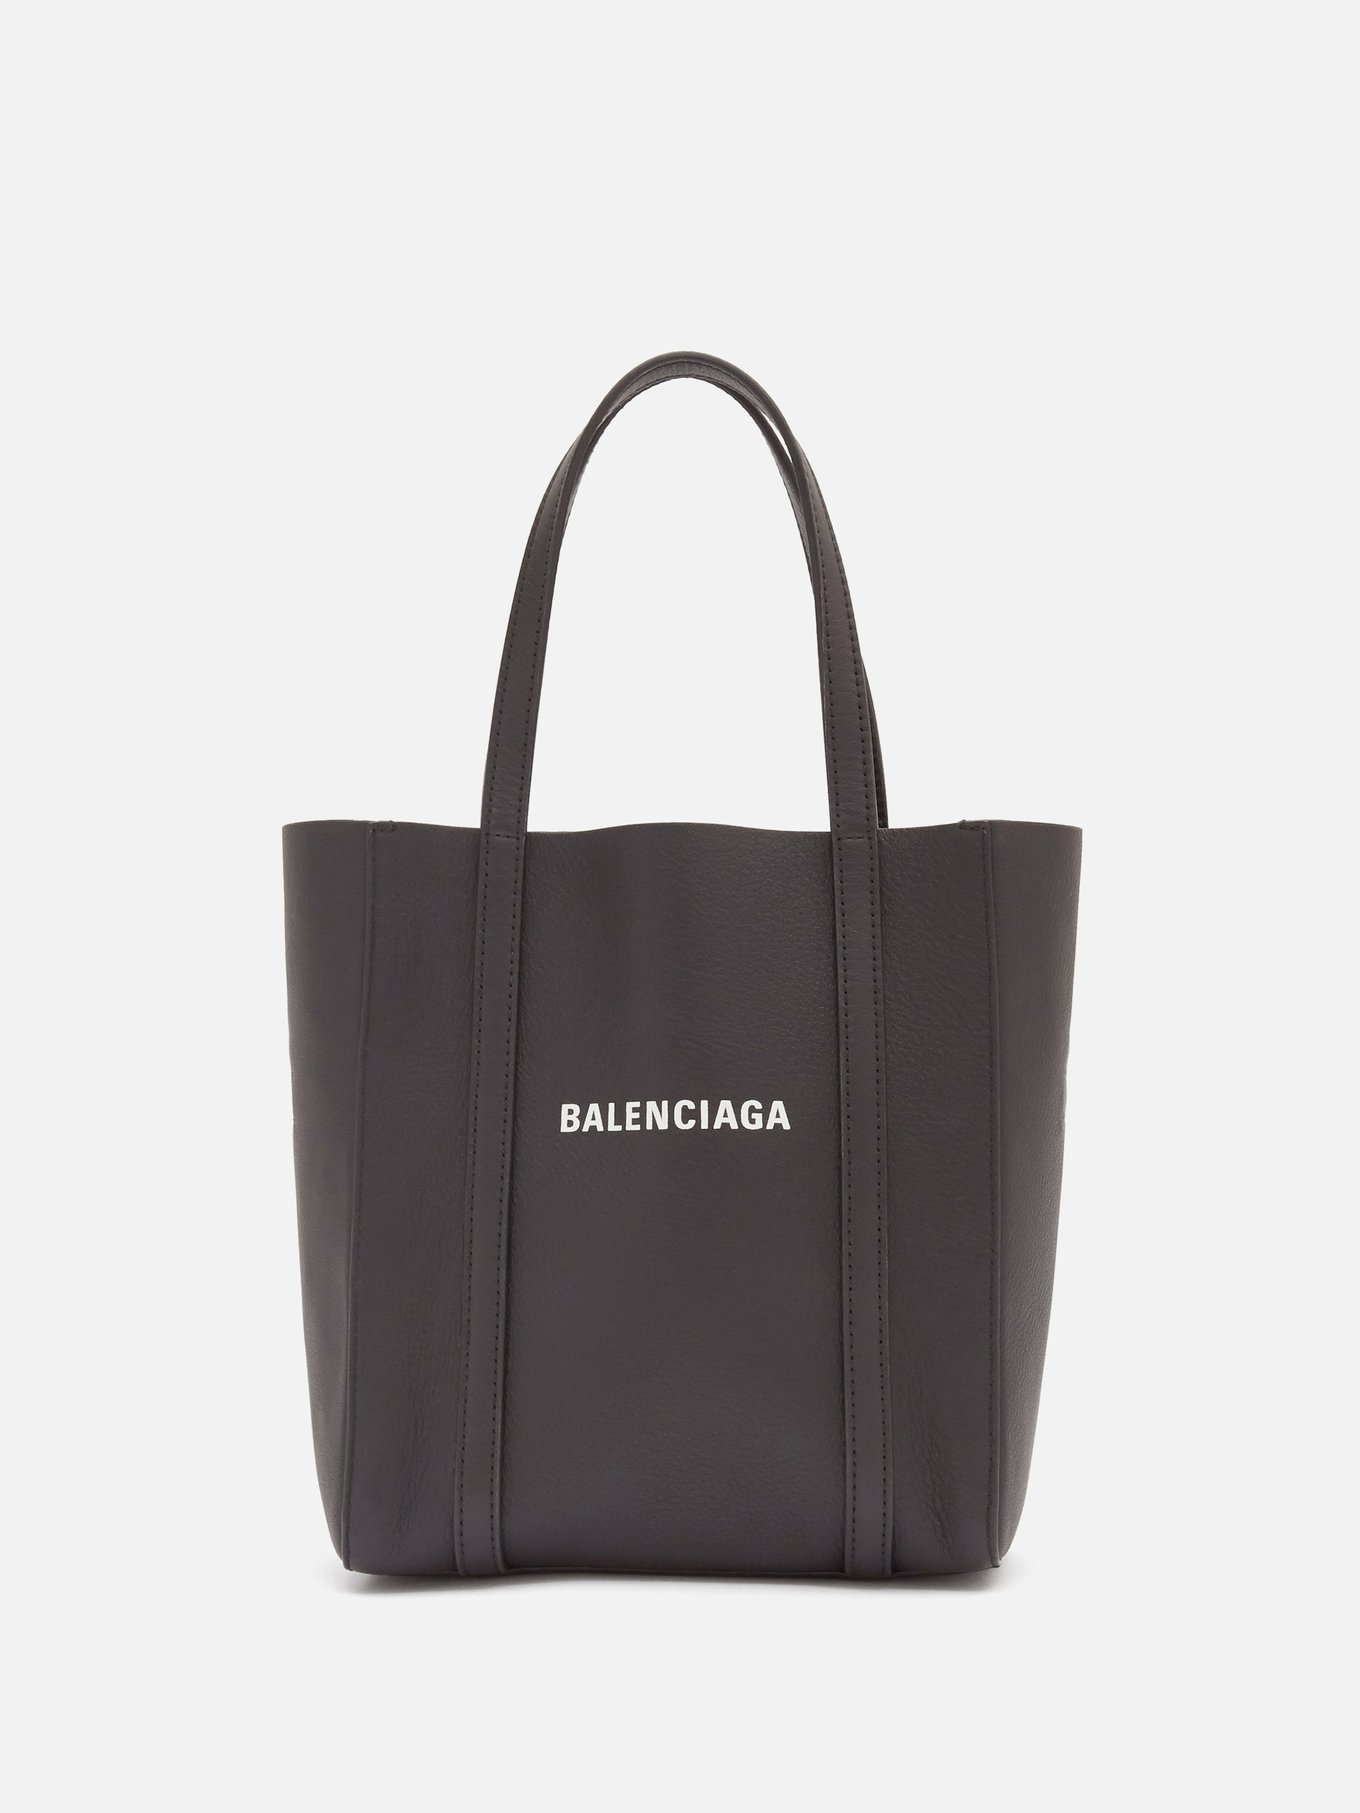 Hofte Amorous At sige sandheden Black Everyday leather tote bag | Balenciaga | MATCHESFASHION US